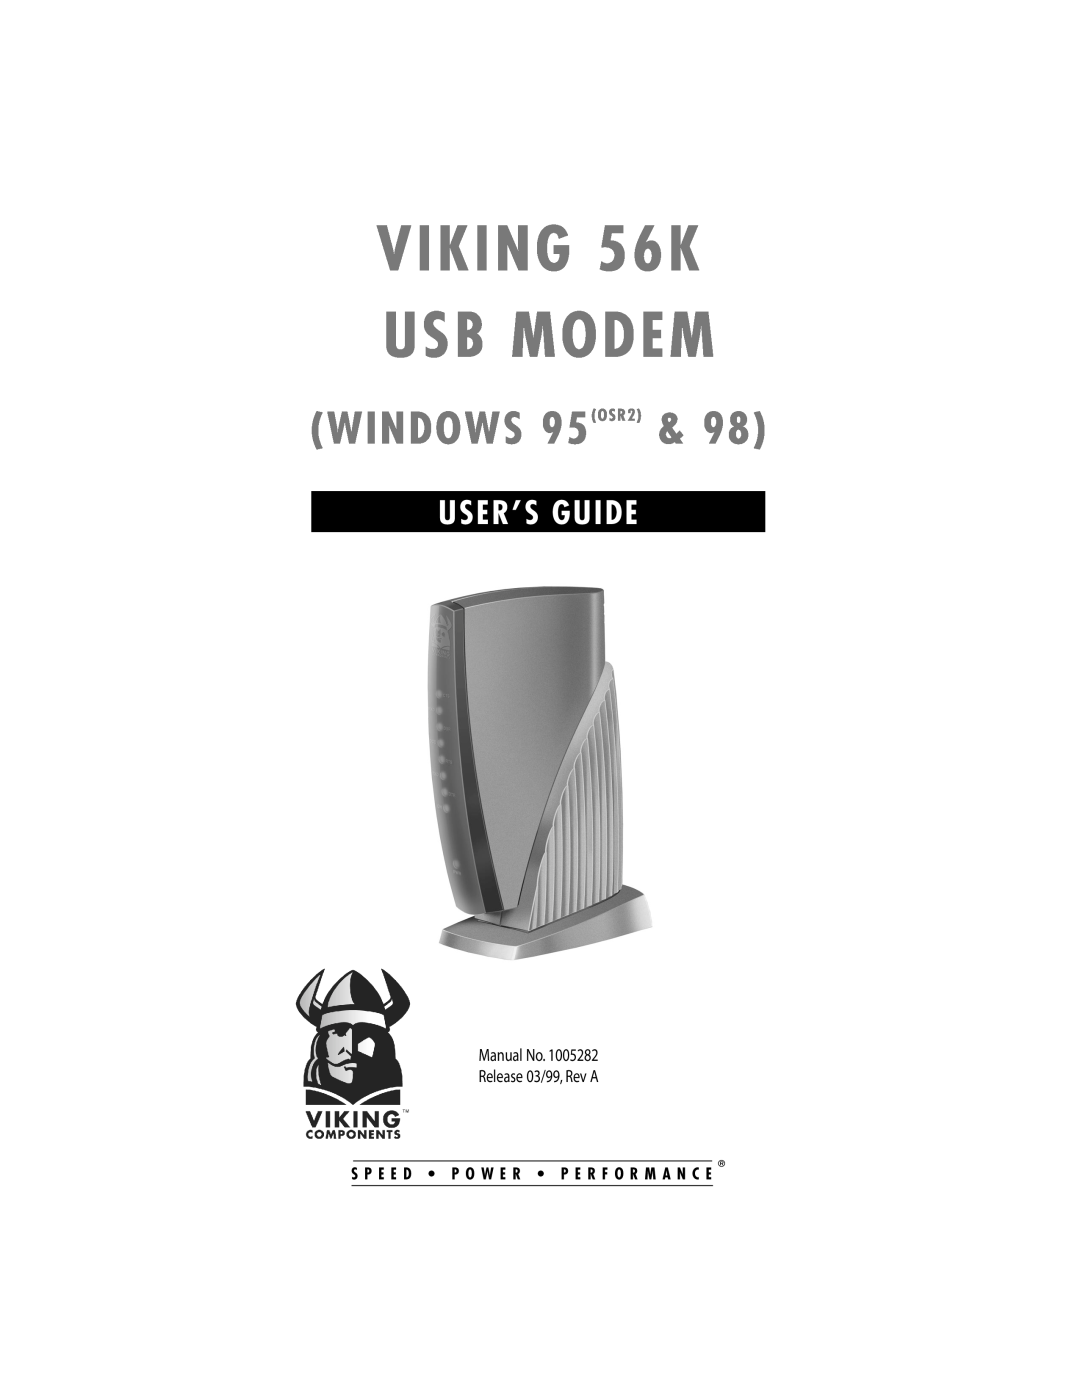 Viking InterWorks manual VIKING 56K USB MODEM, WINDOWS 95OSR2, User’S Guide, S P E E D P O W E R P E R F O R M A N C E 